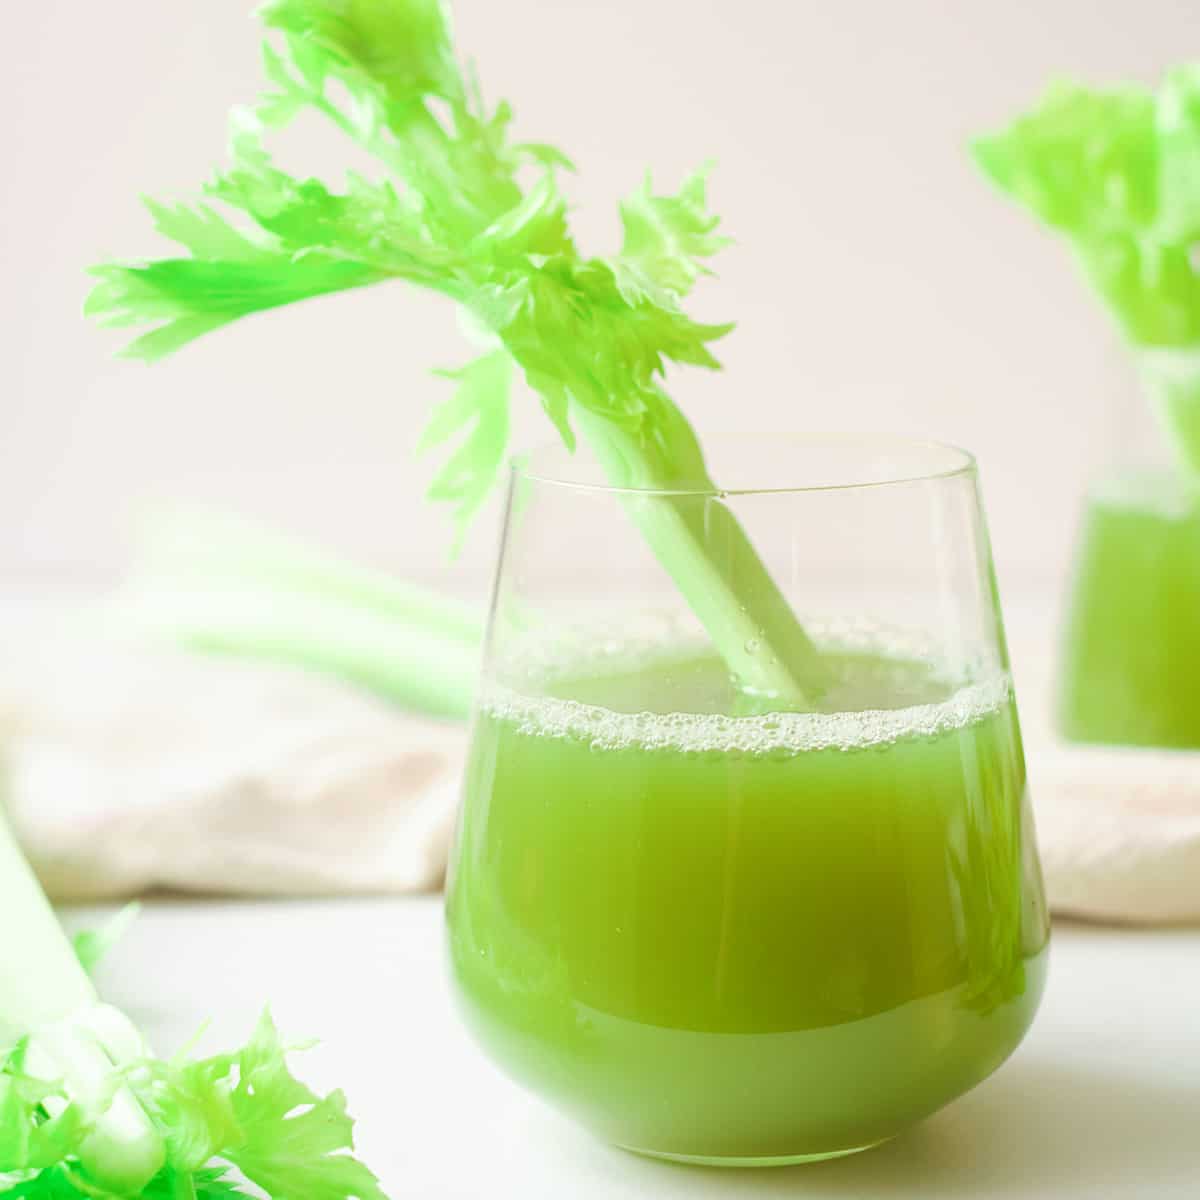 Glass of celery juice with stalk. 